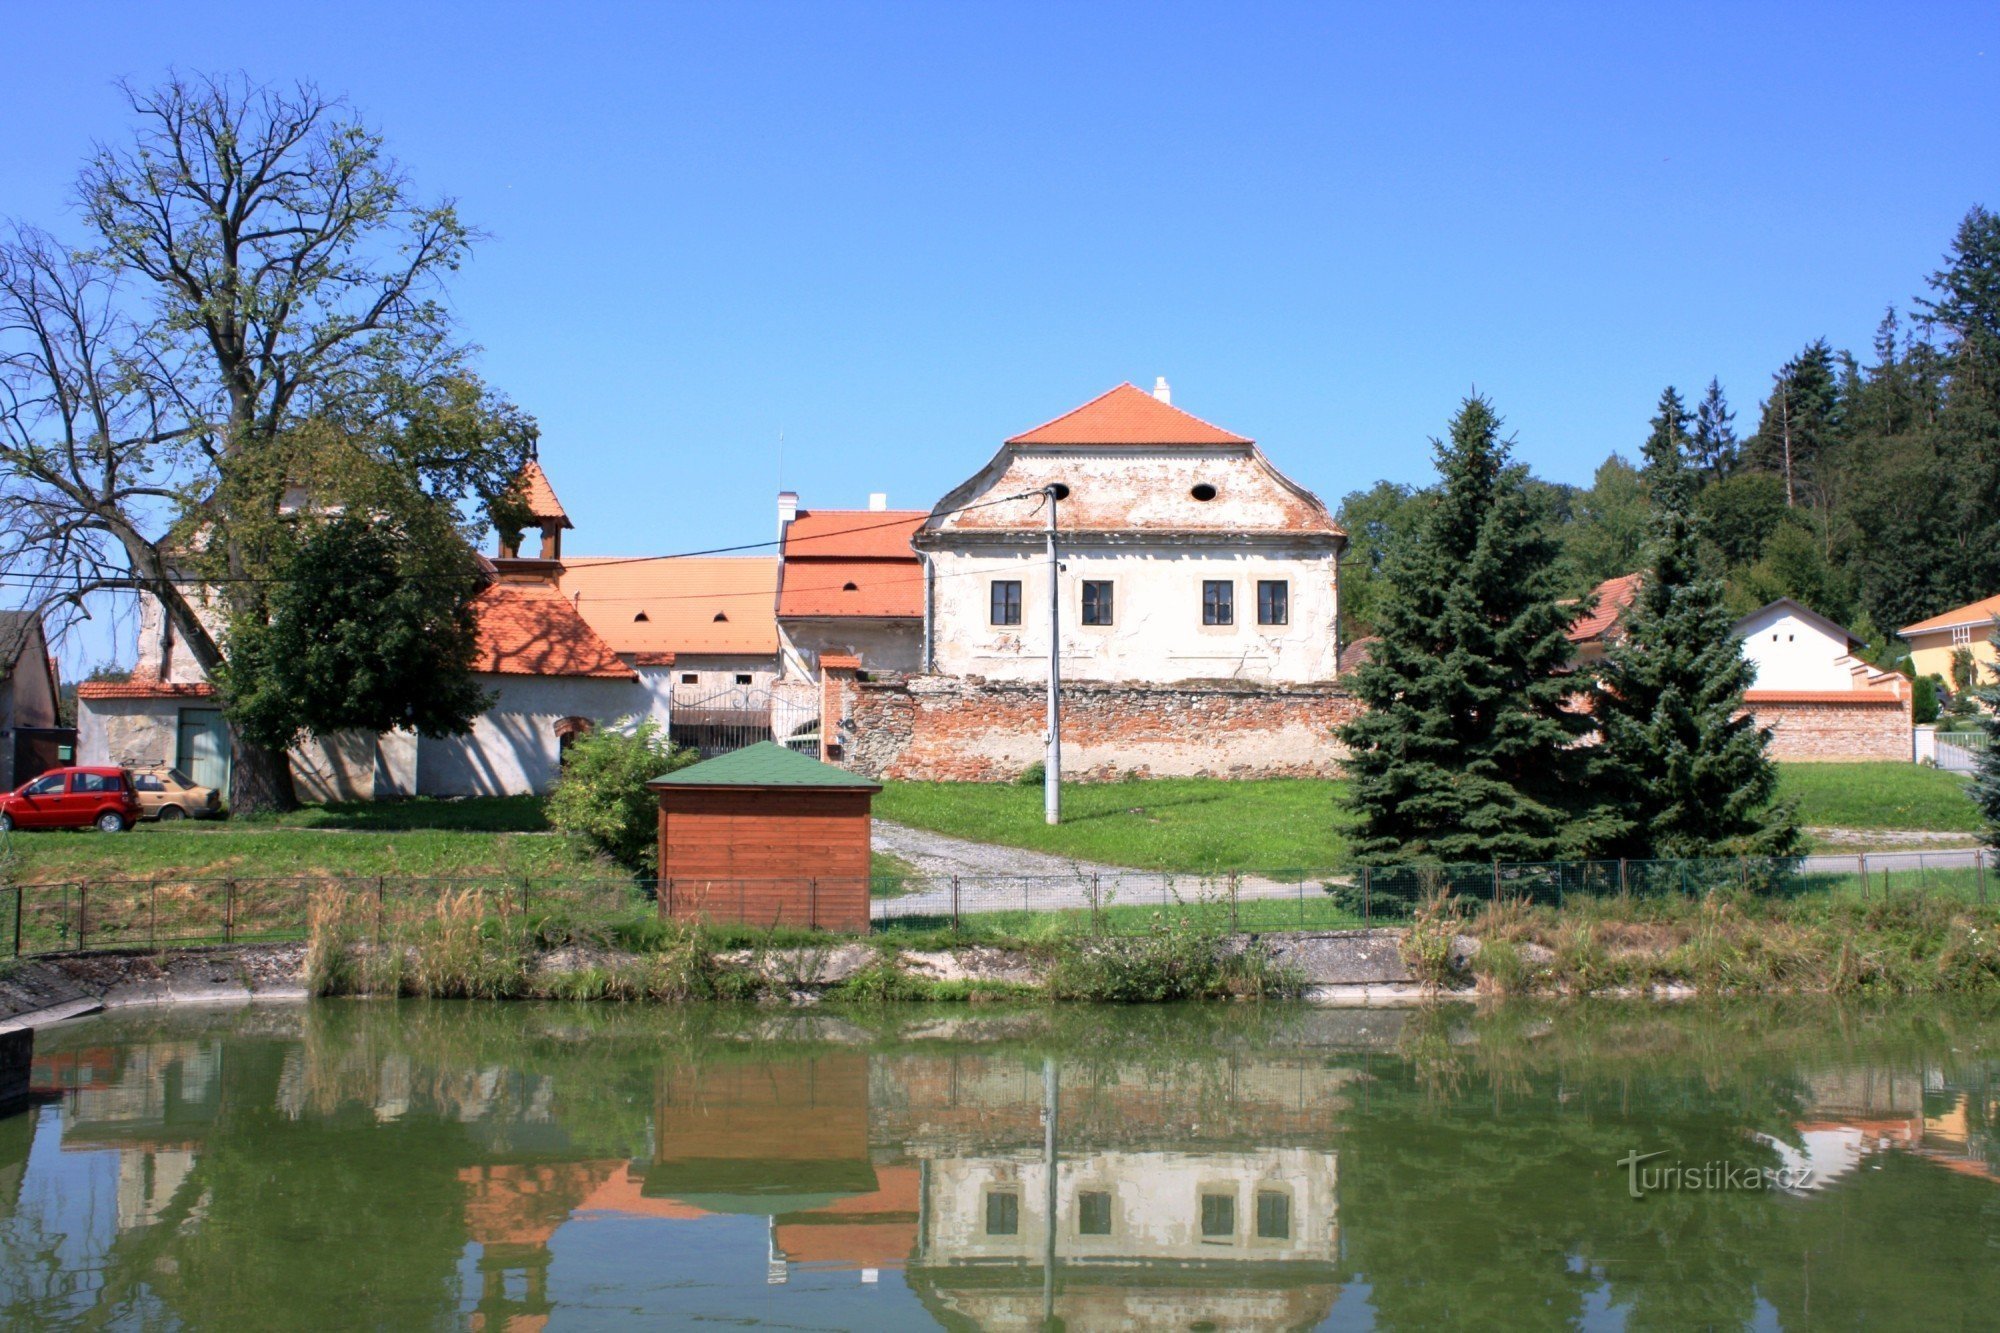 Vohančice - lâu đài